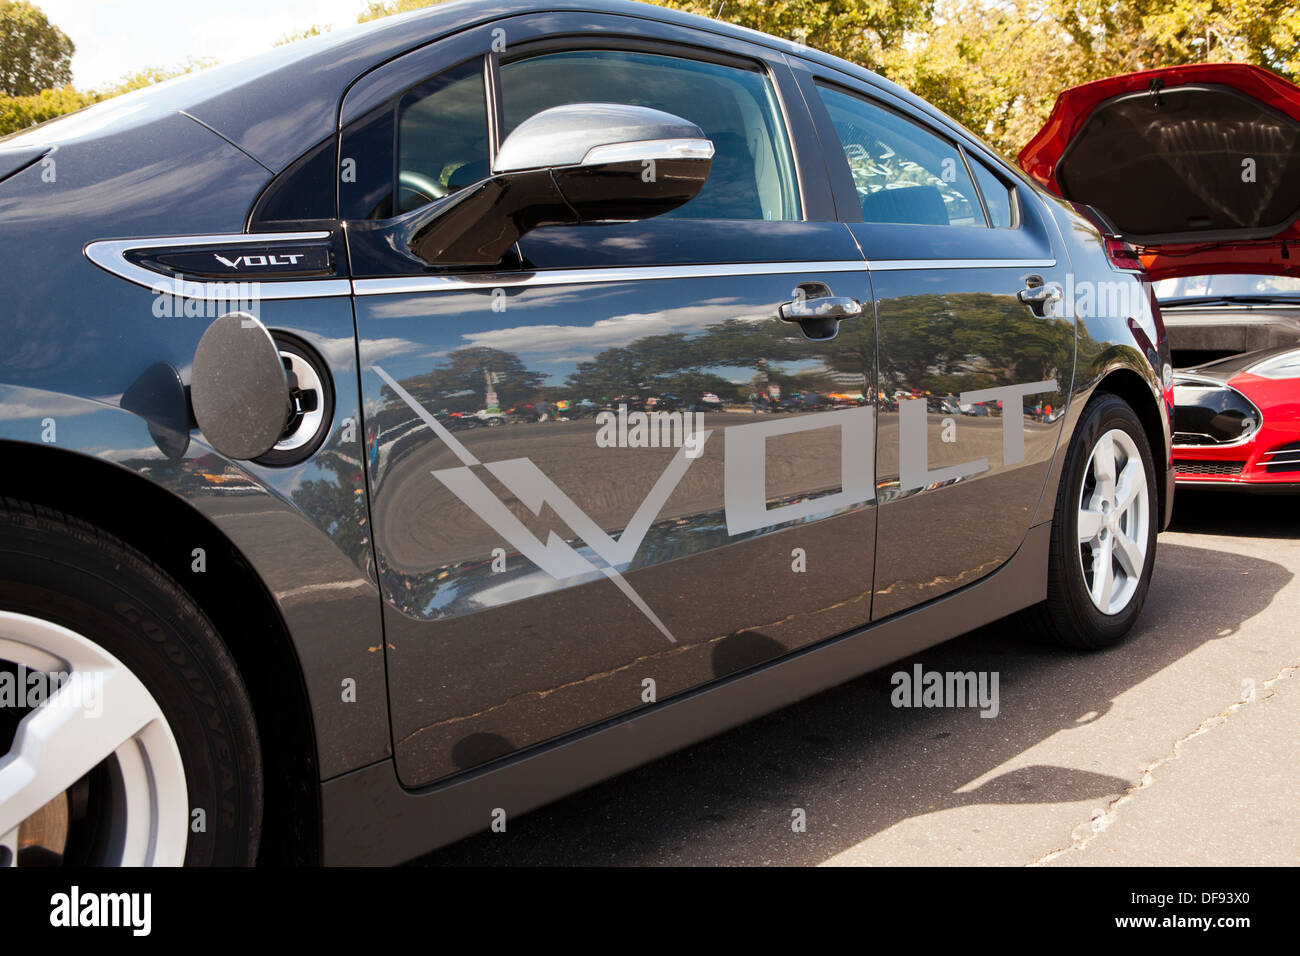 Chevy Volt electric hybrid car Stock Photo